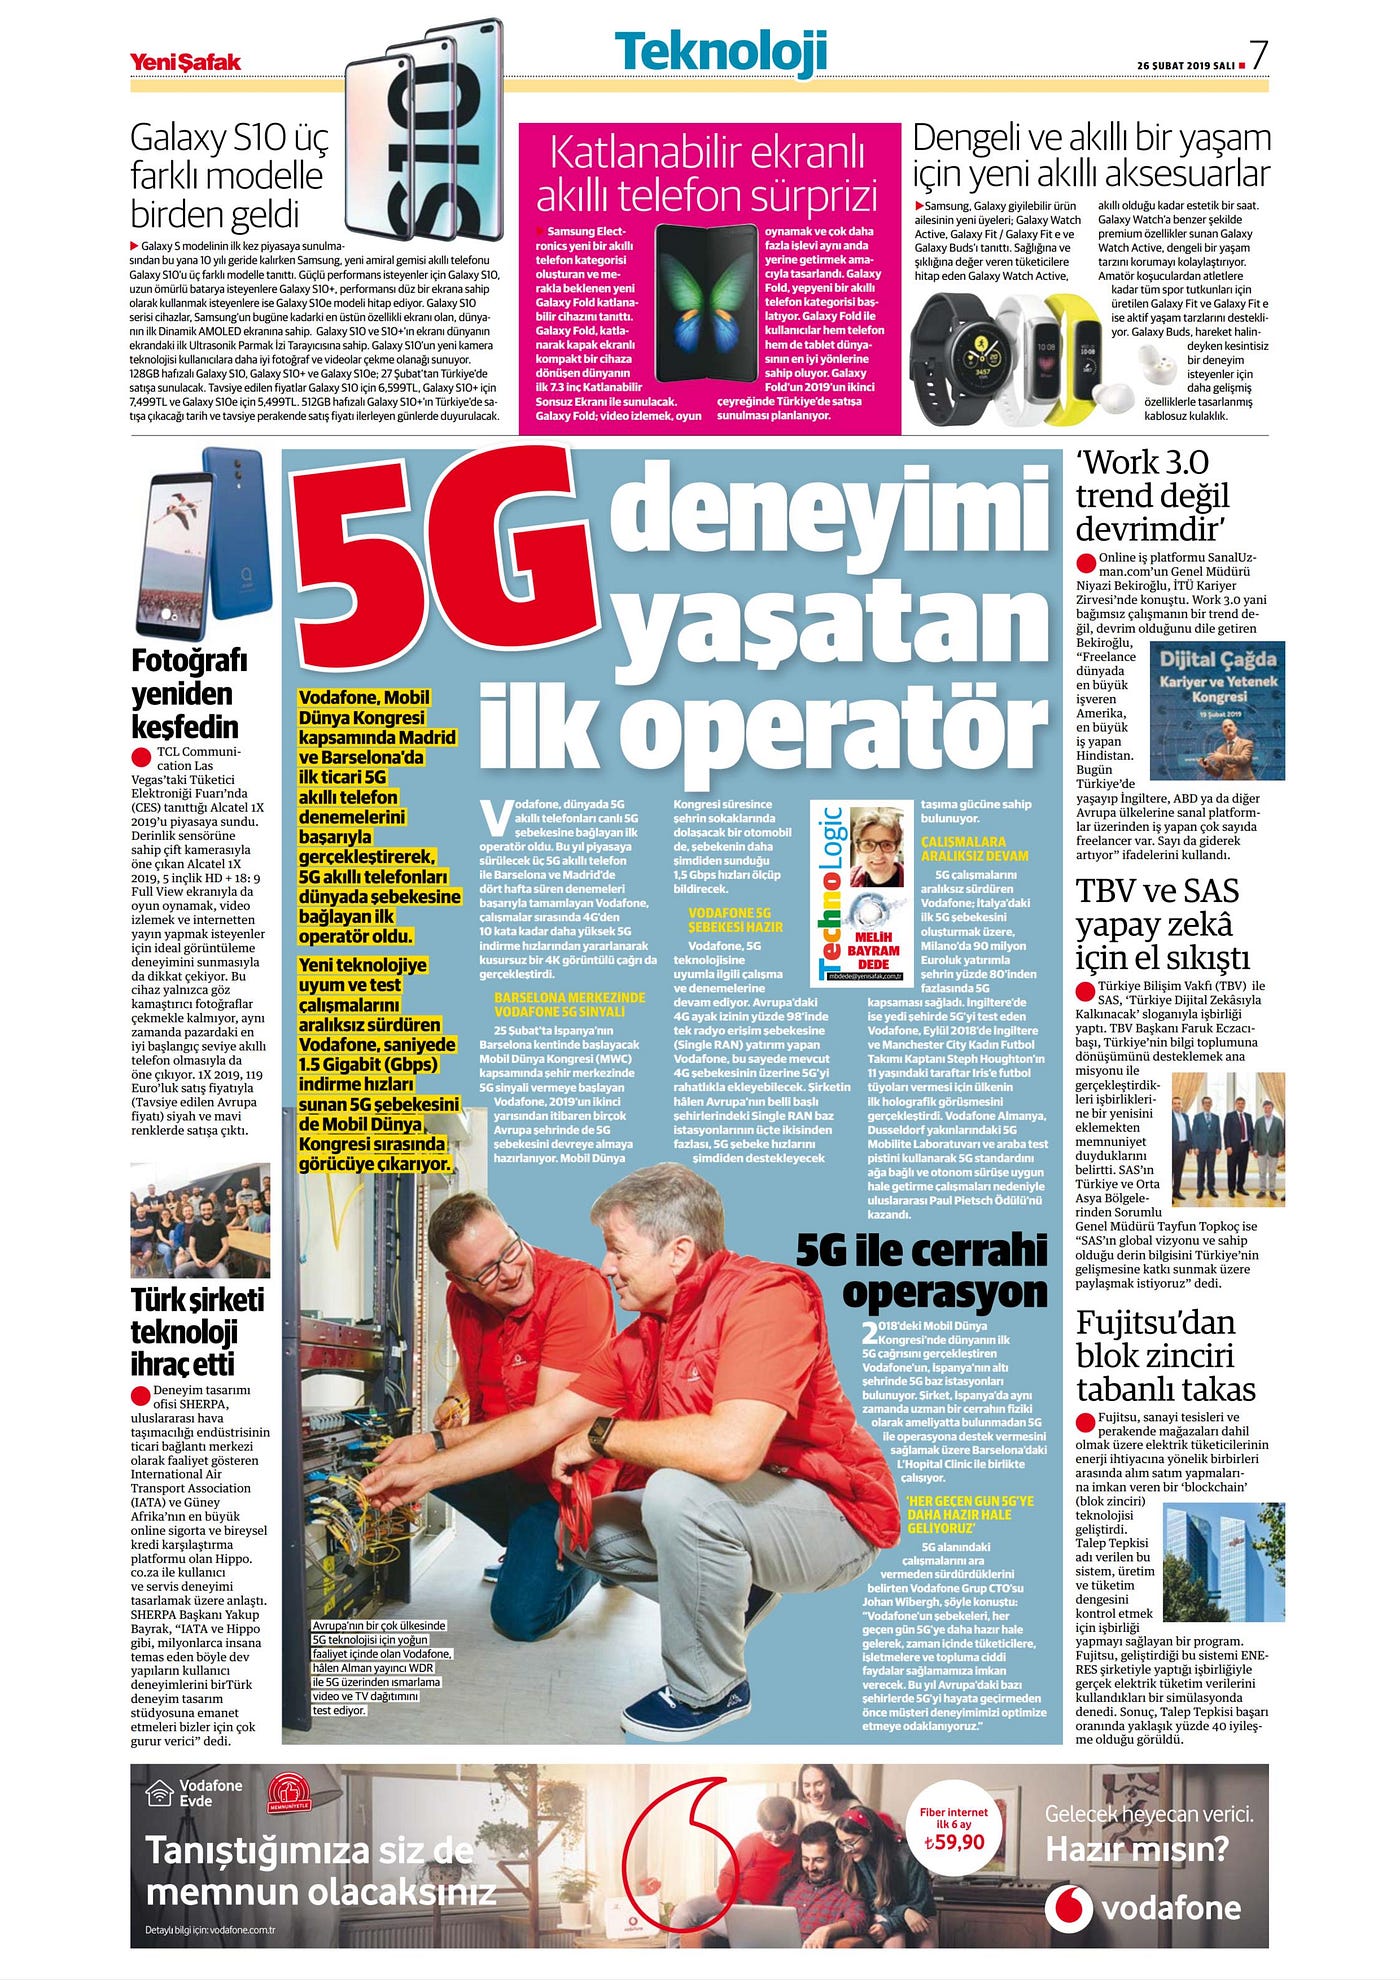 Vodafone 5G deneyimi yaşatan ilk operatör | by Melih Bayram Dede | Medium